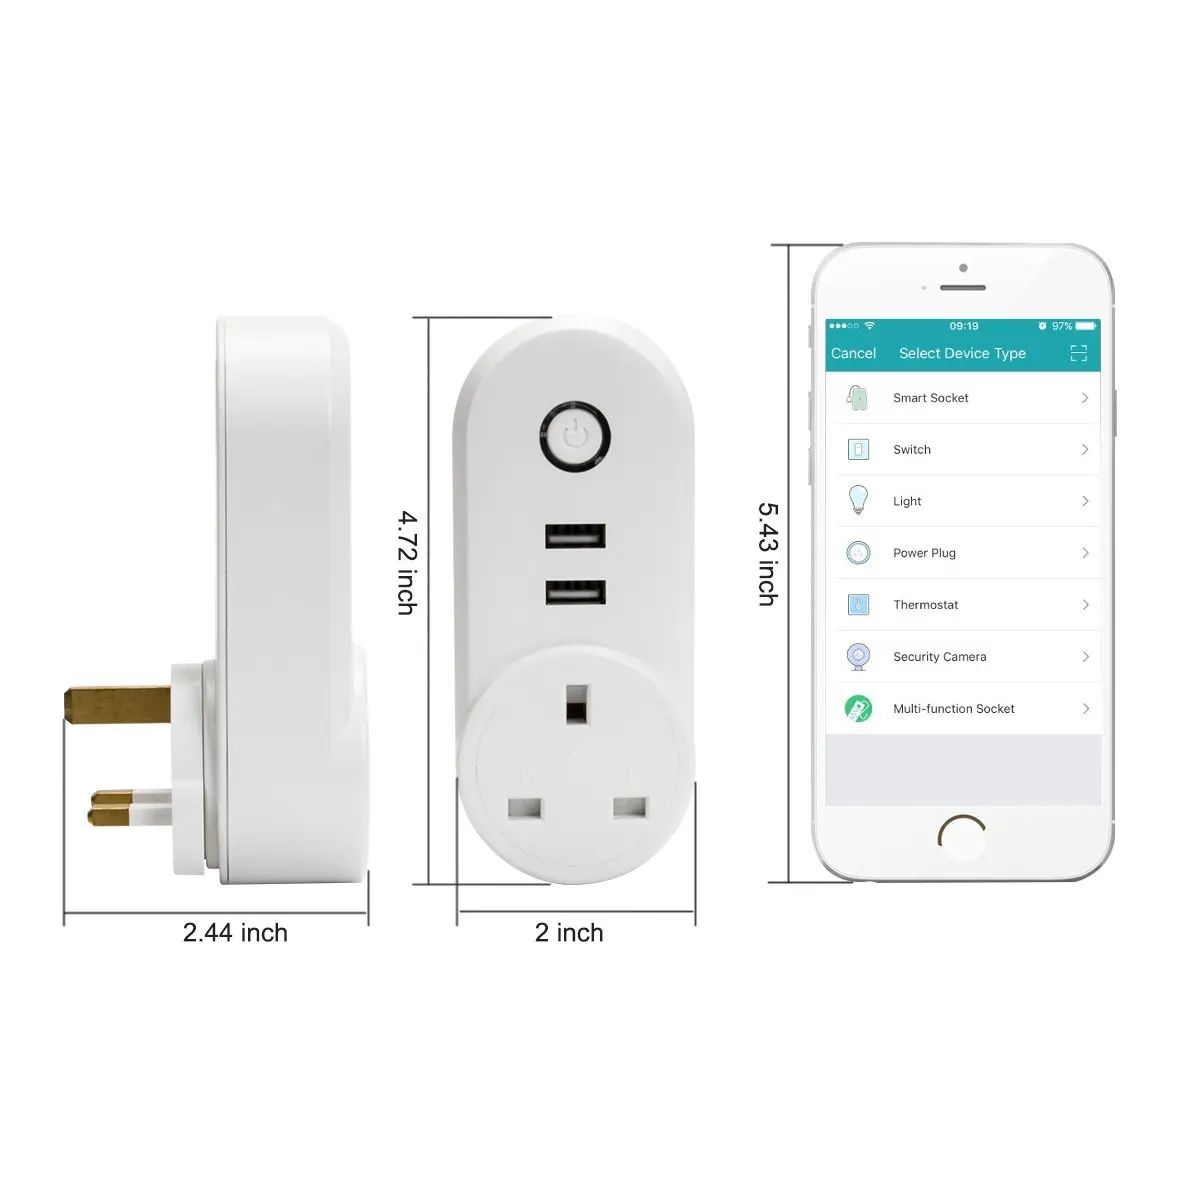 Wi-Fi Smart power Plug Британский магазин розетка с стабилизатор напряжения с usb функция управления синхронизацией голоса работает с Amazon Alexa, Google Home